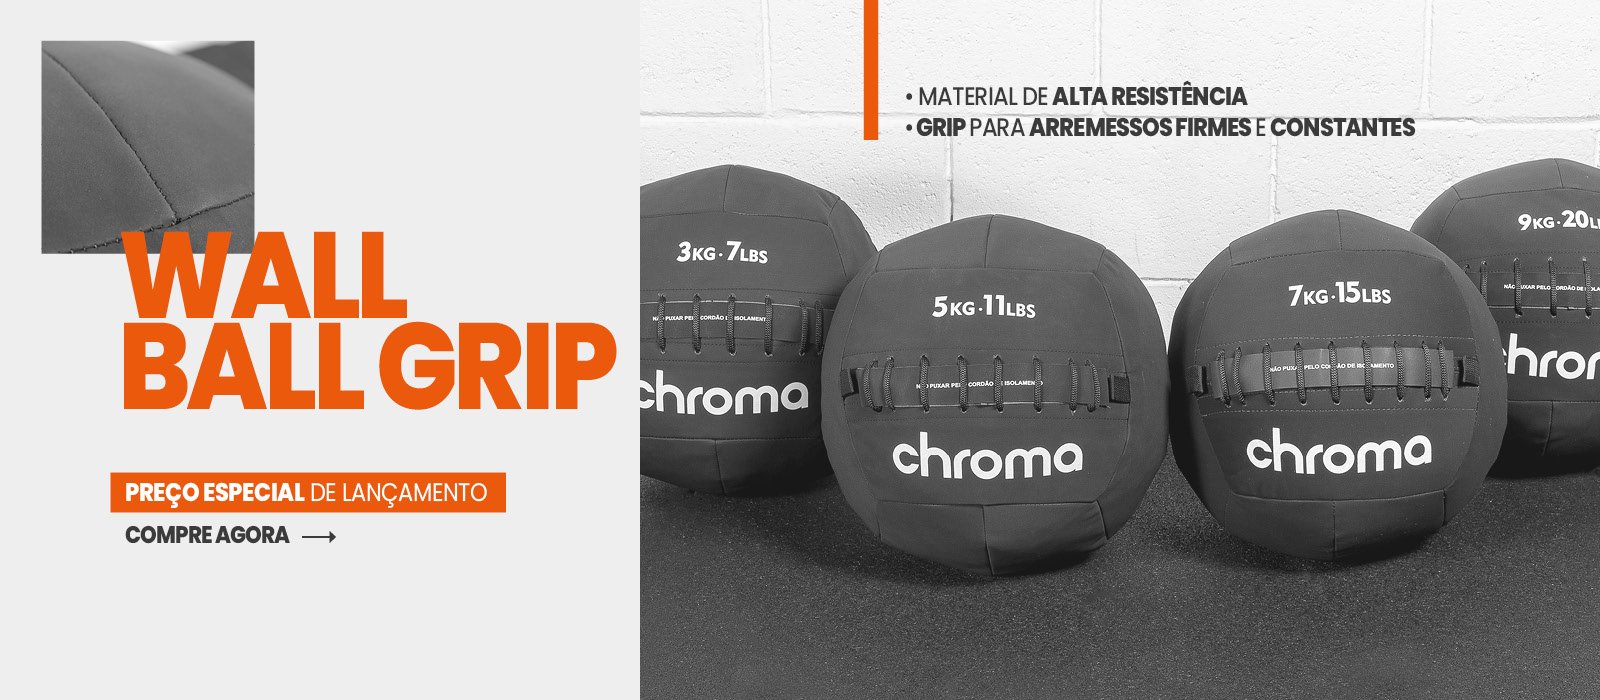 chroma-wall-ball-grip-banners2